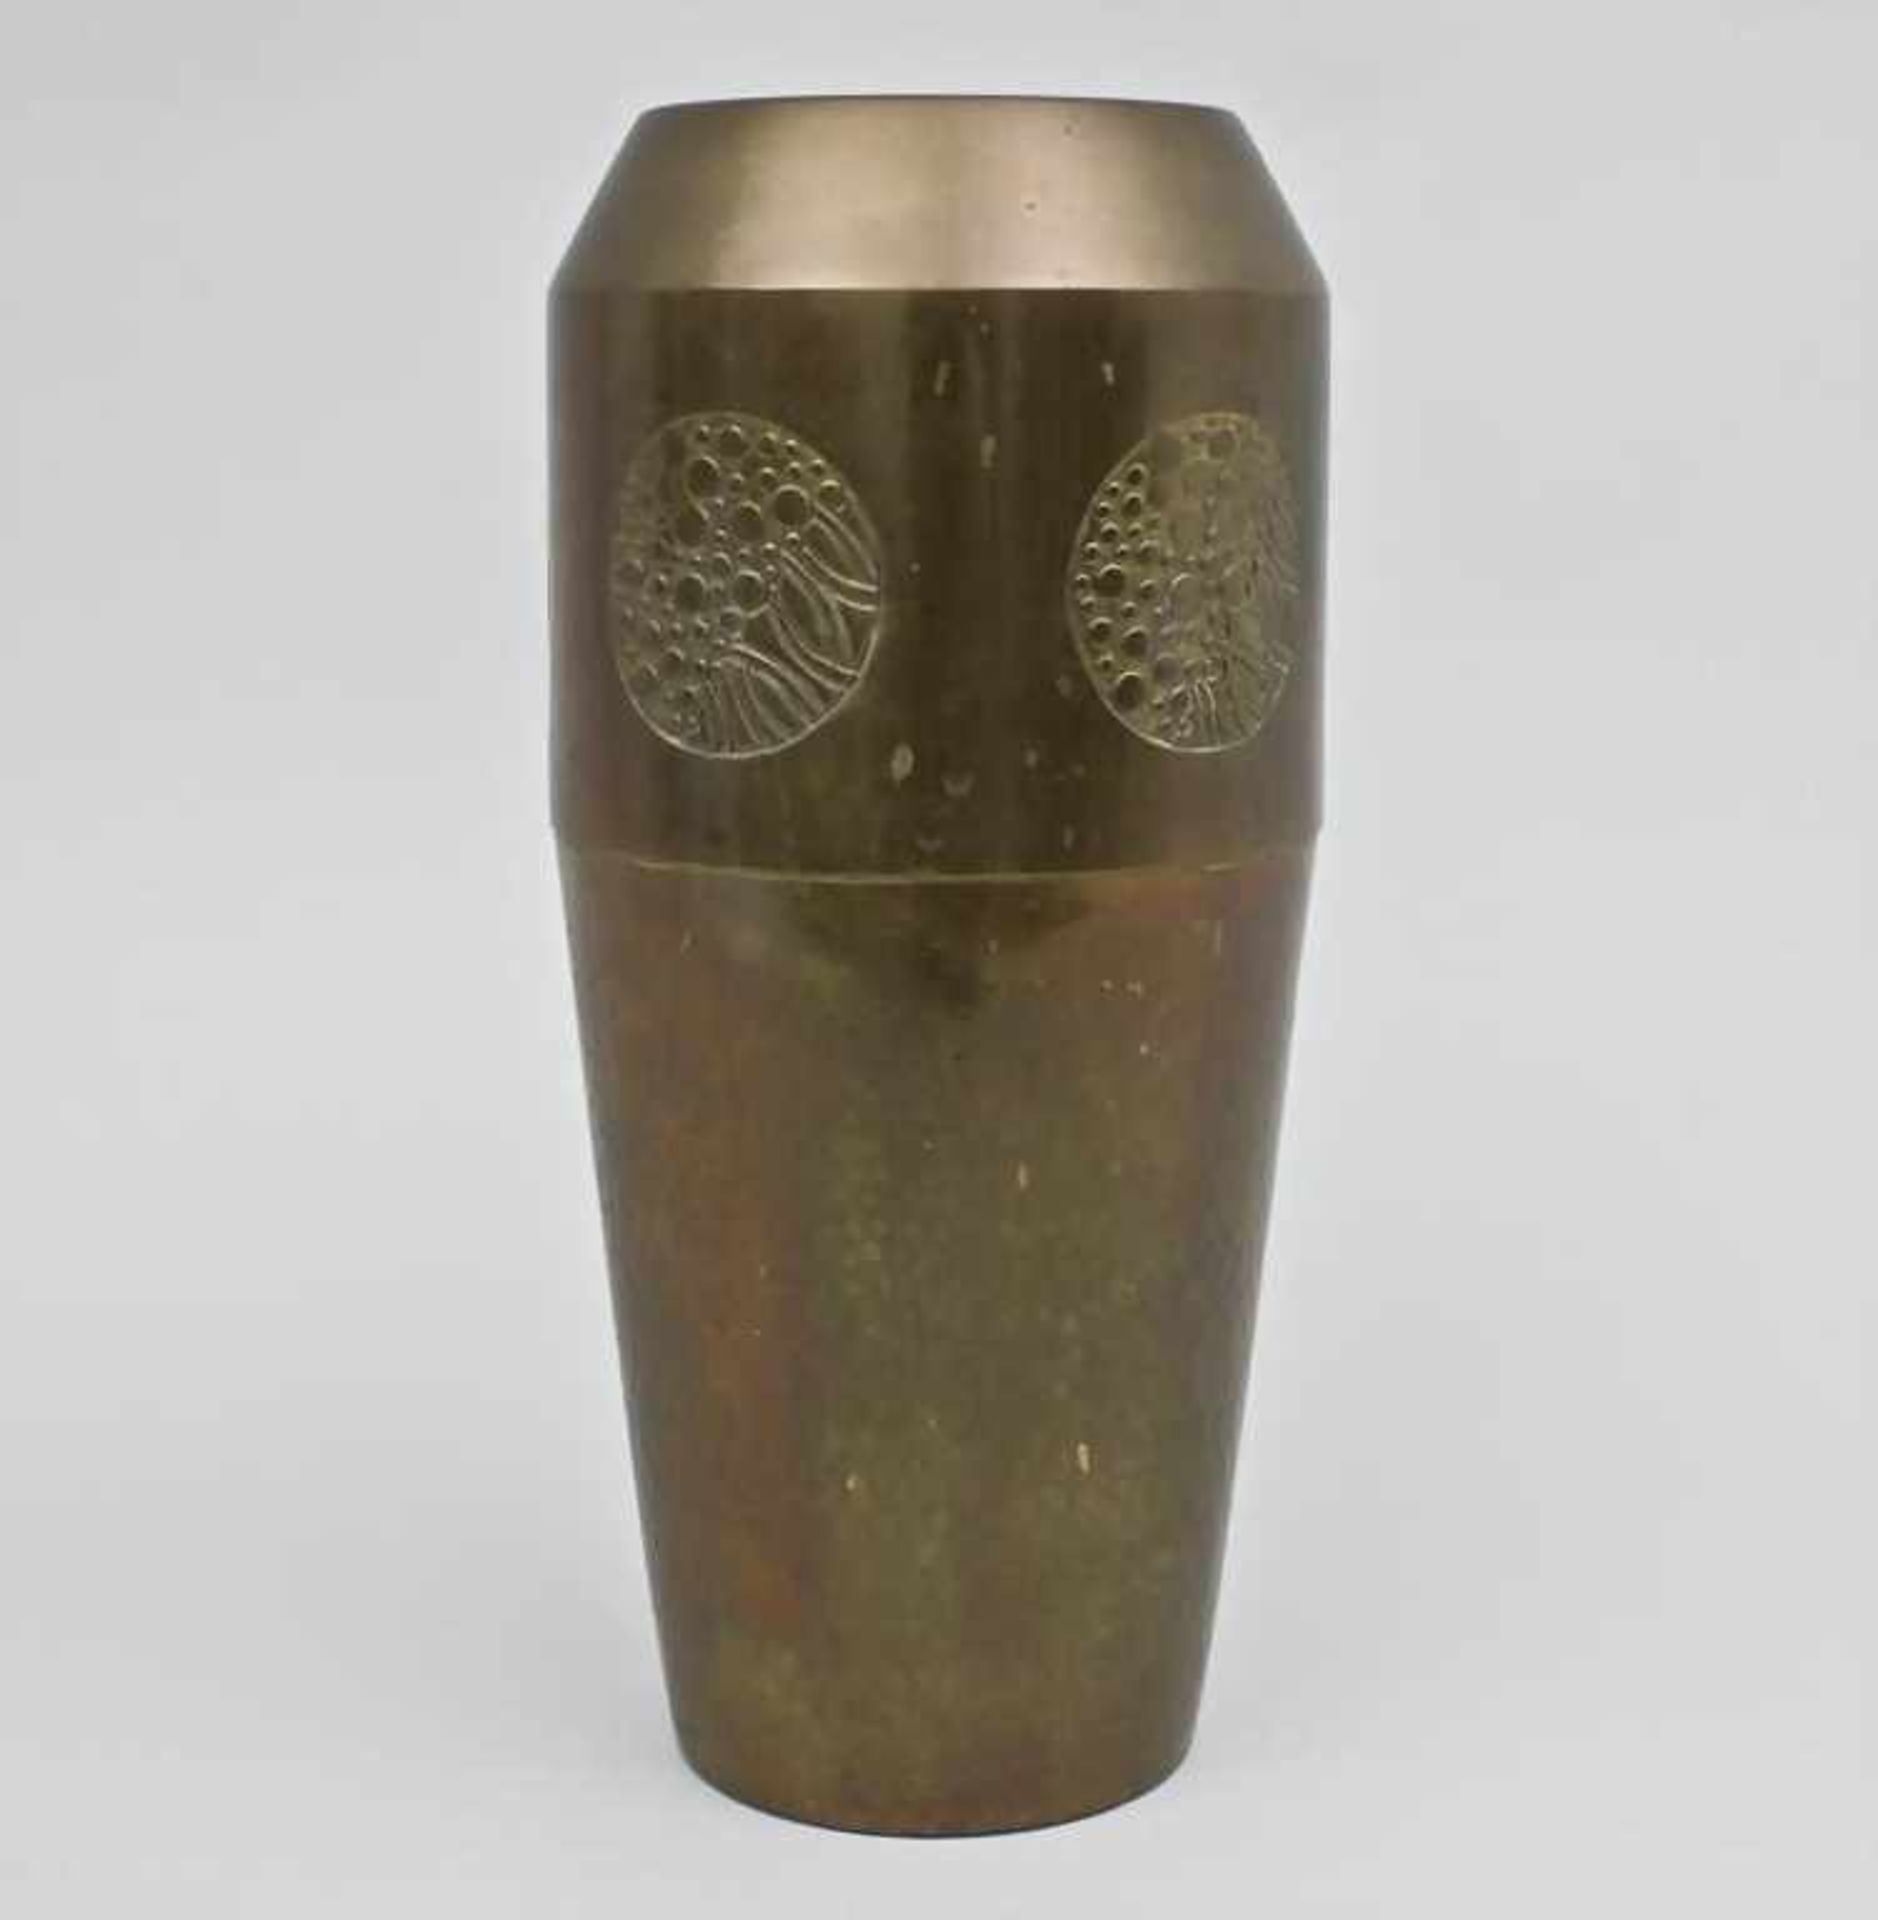 Jugendstil-Vase/Art Nouveau Brass Vase, WMF, um 1900 Messing, handgetrieben, umlaufend